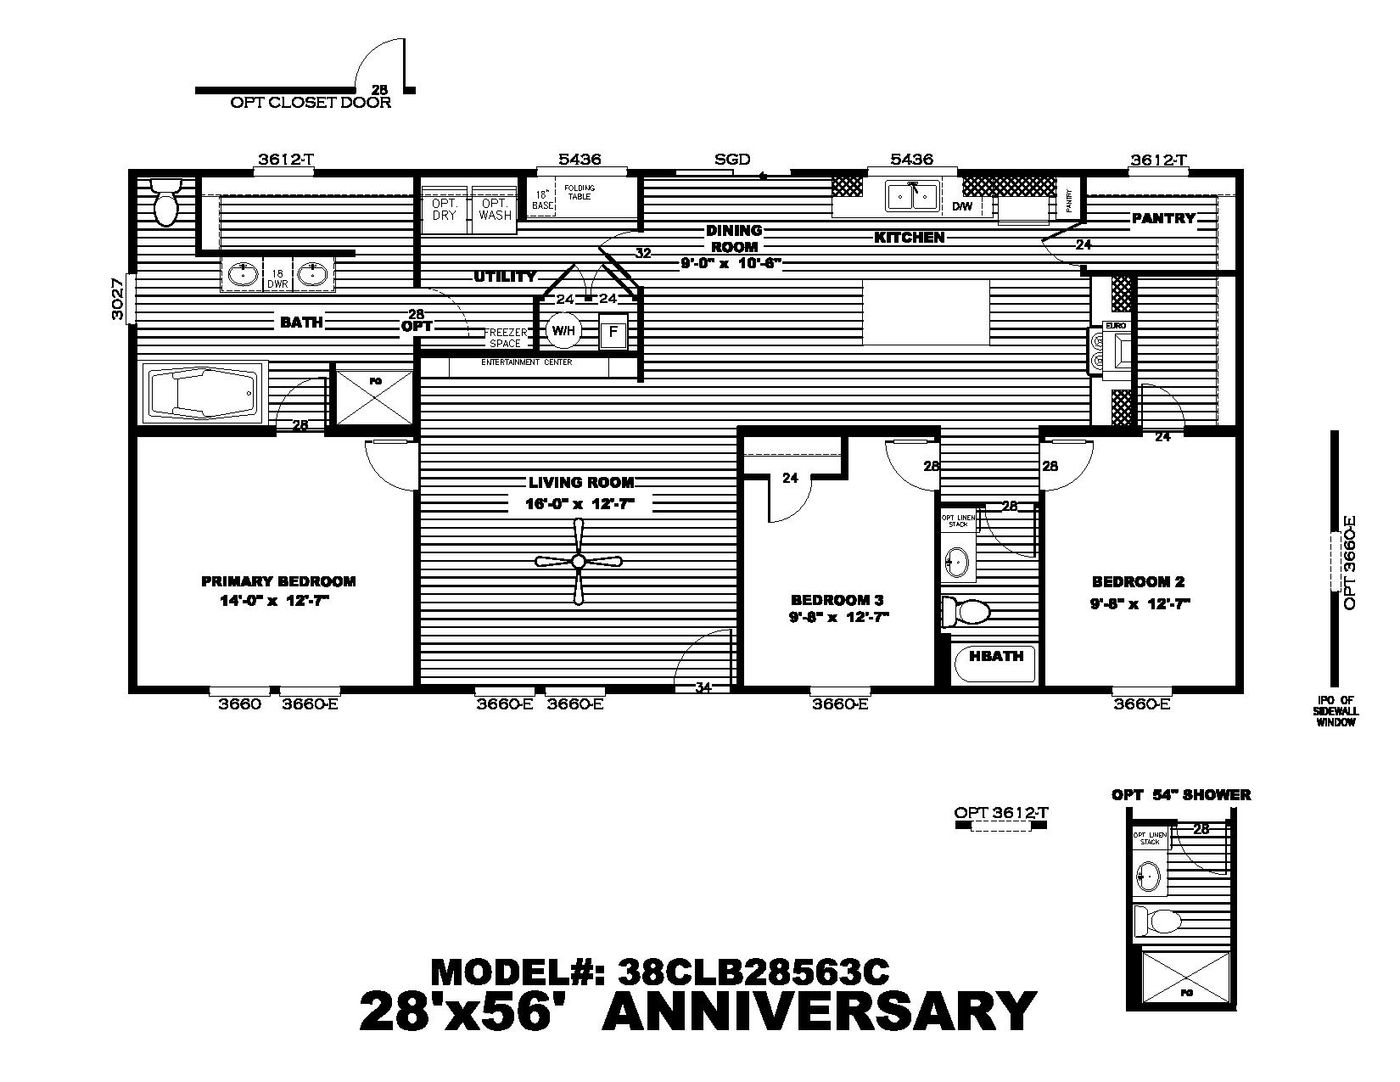 The Anniversary 2.1 Floor Plan